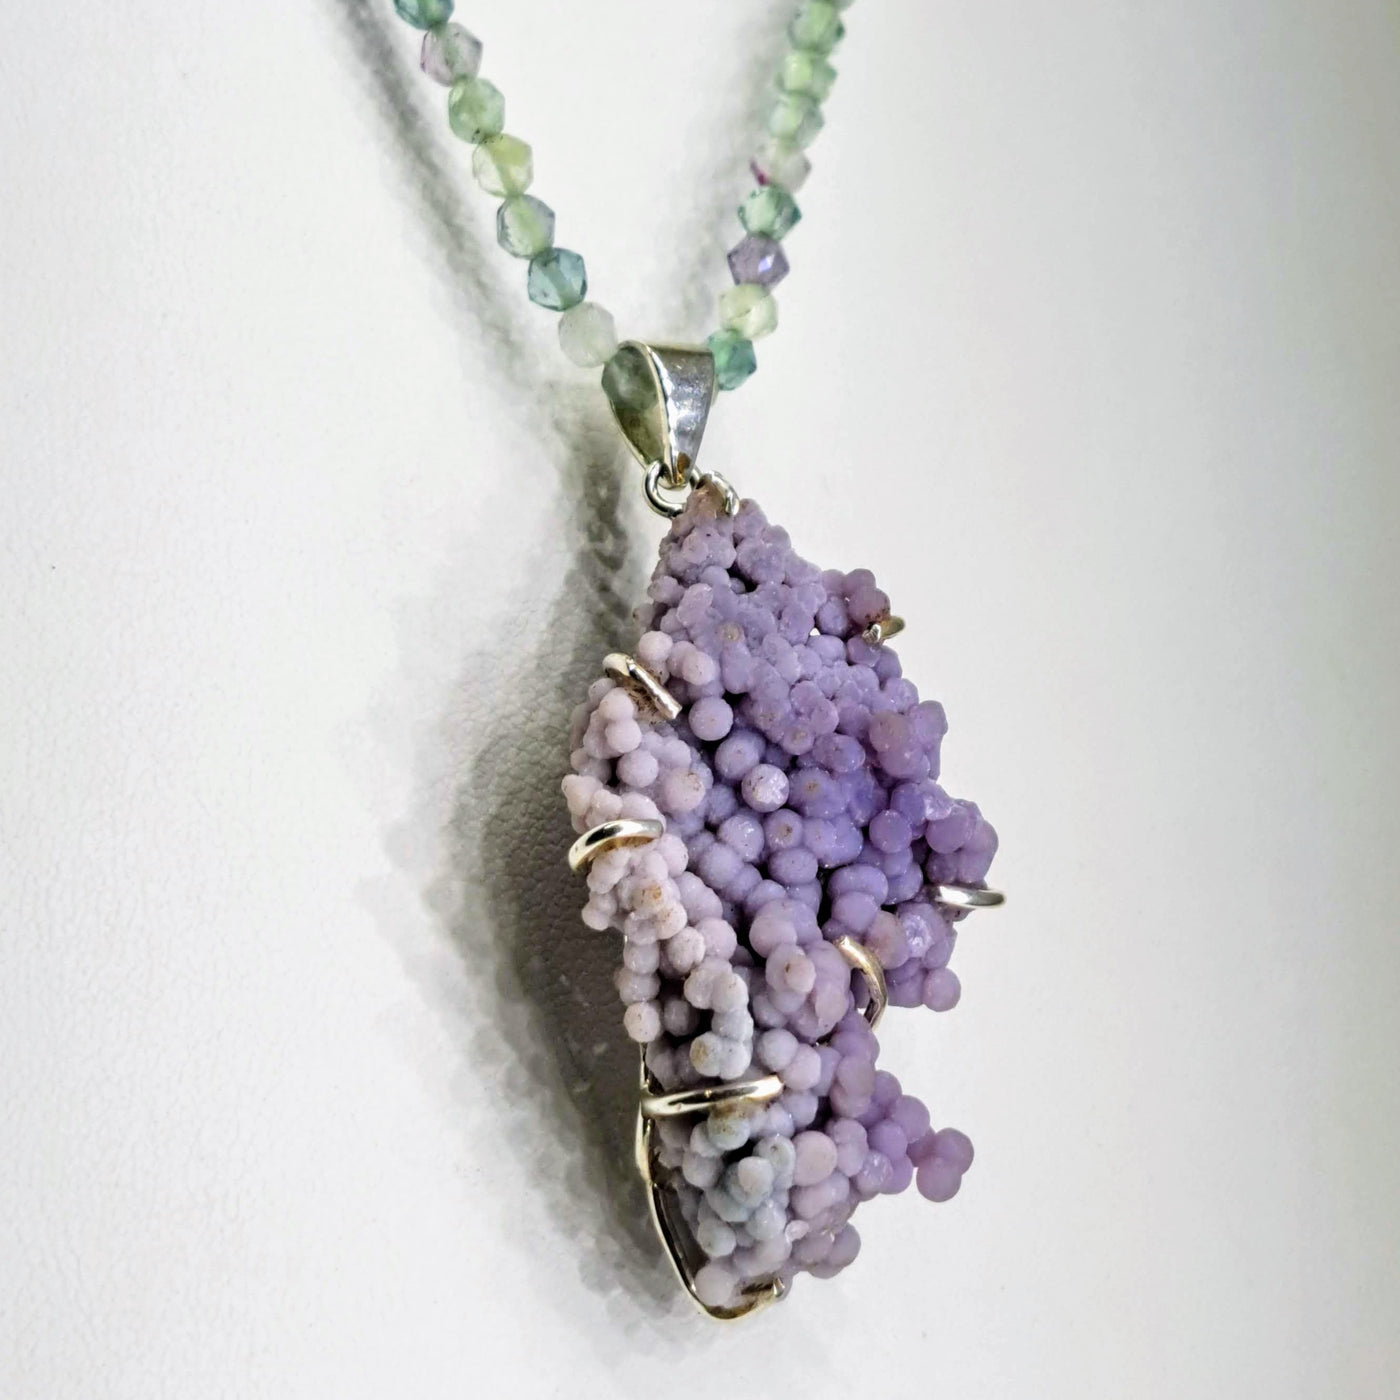 "Off The Vine" Pendant Necklace - Grape Druzy Agate, Fluorite, Sterling